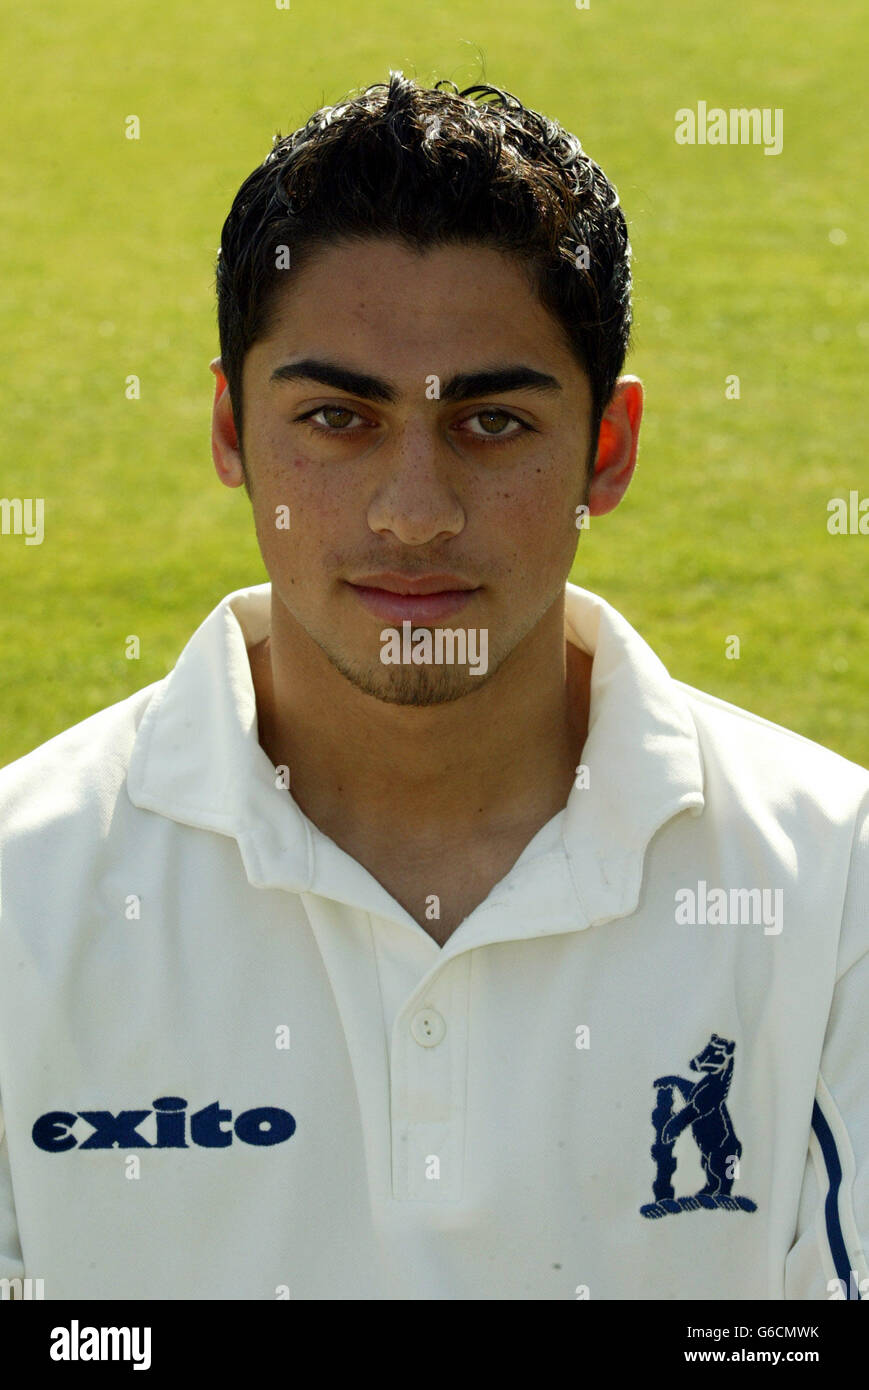 Naqaash Tahir - Warwickshire County Cricket Club 2003 Saison Fotocall in Edgbaston, Birmingham. Stockfoto